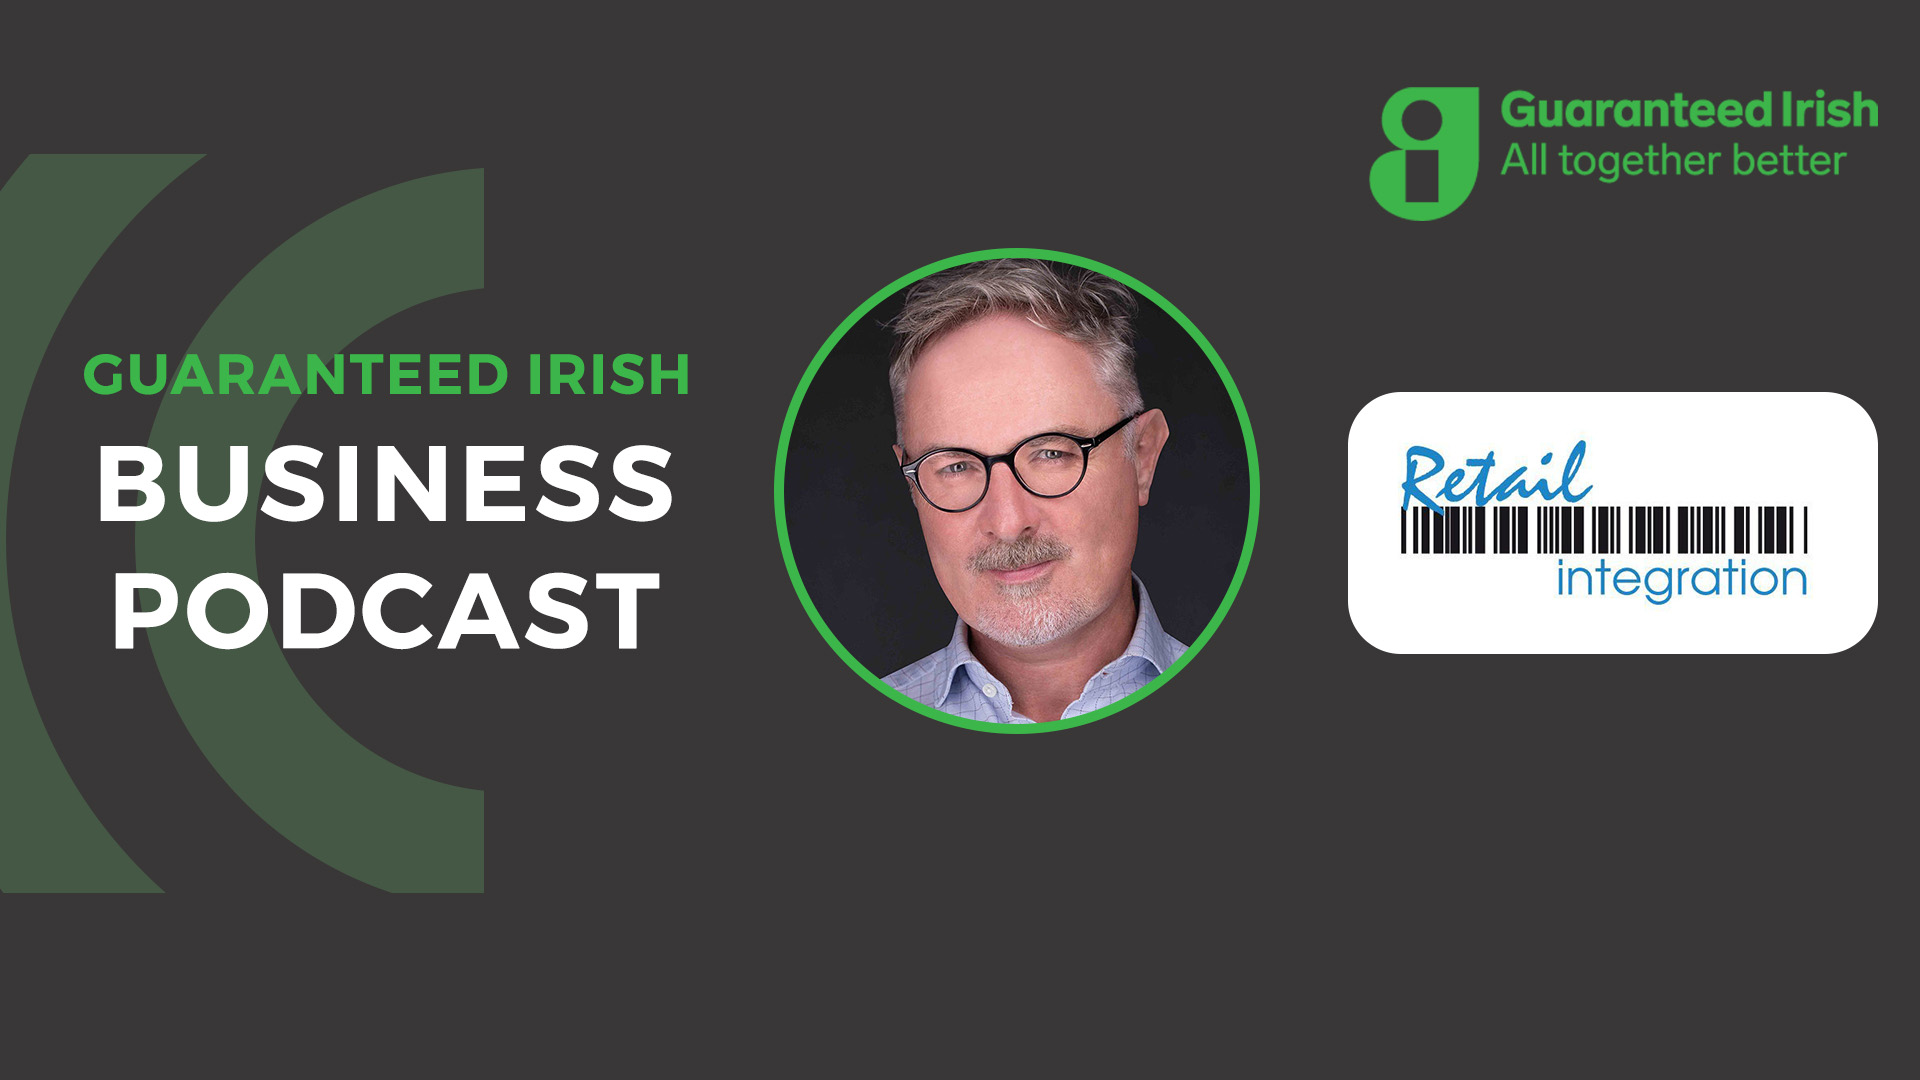 Guaranteed Irish Podcast features Patrick Heslin, Retail Integration MD